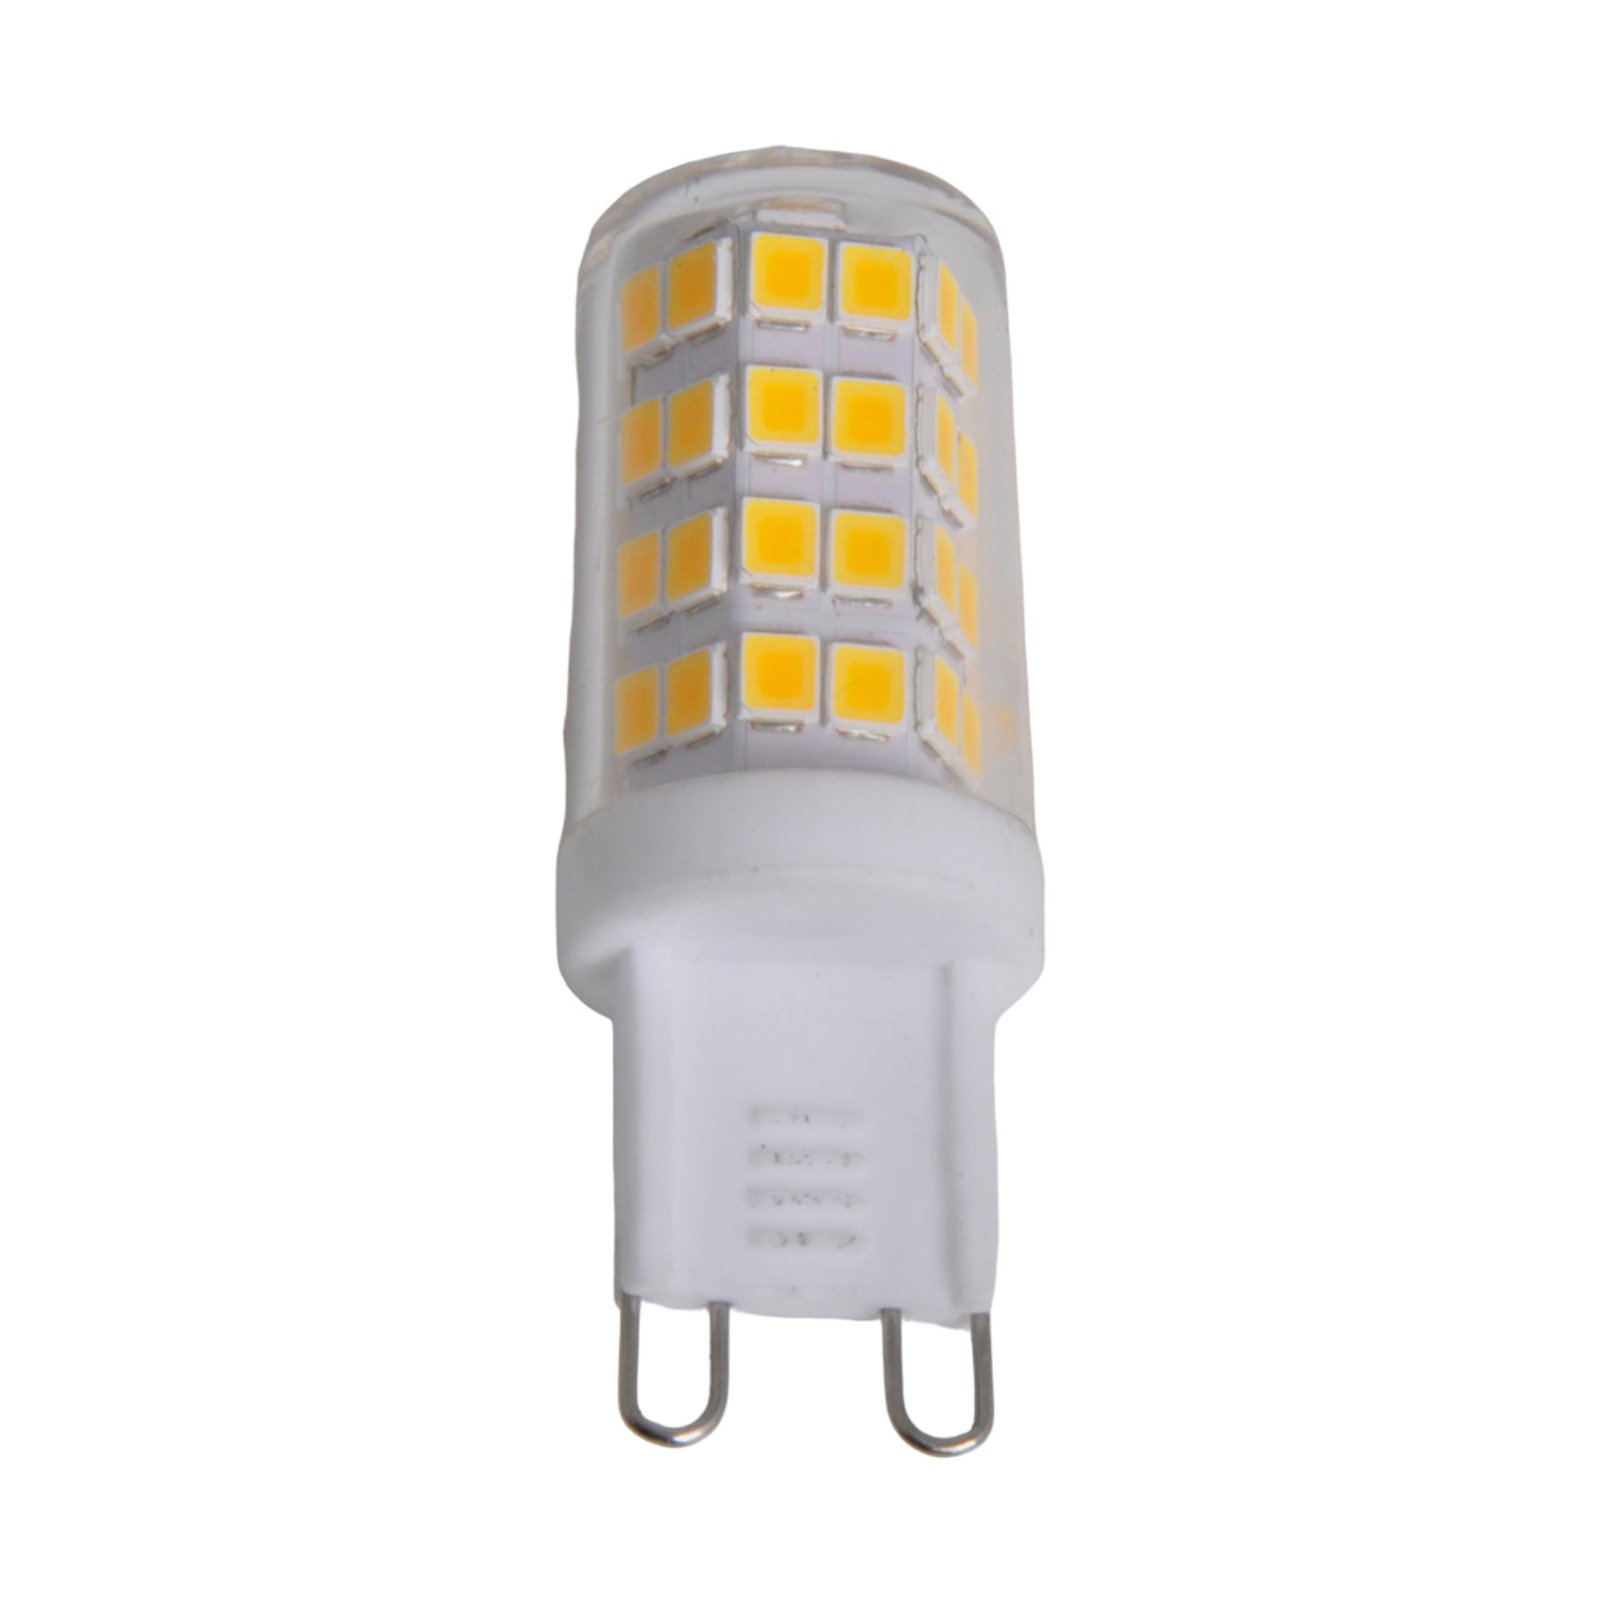 Bi-pin LED bulb G9 3W warm white 3,000K 350 lumens